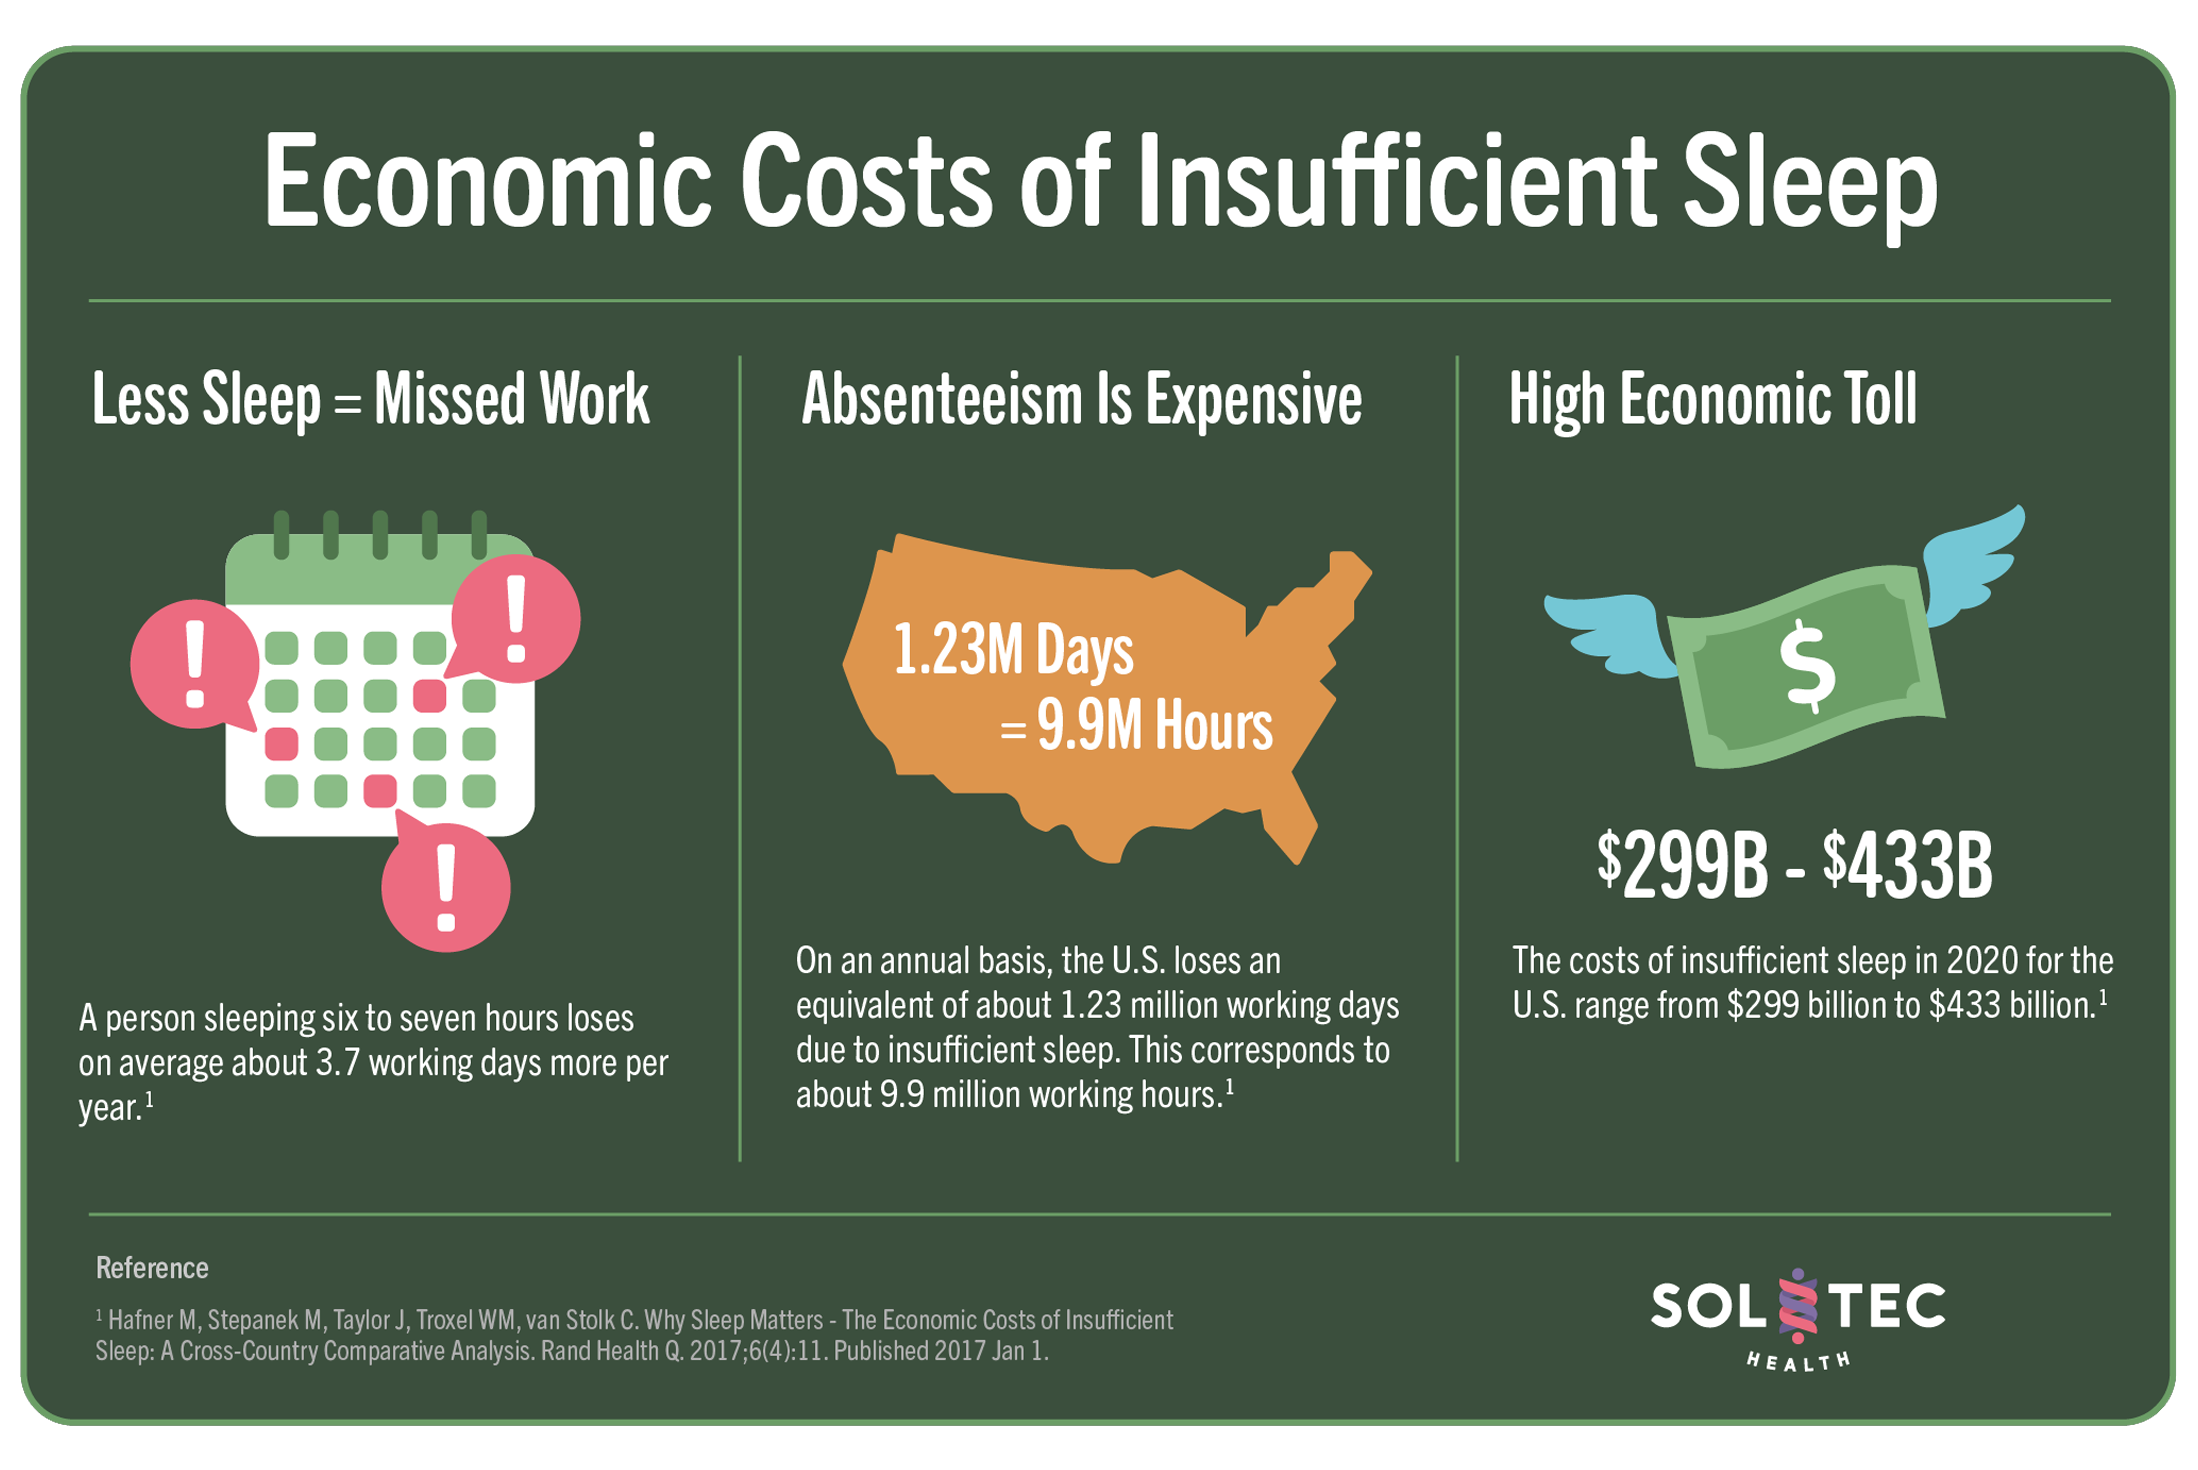 Economic costs of insufficient sleep image